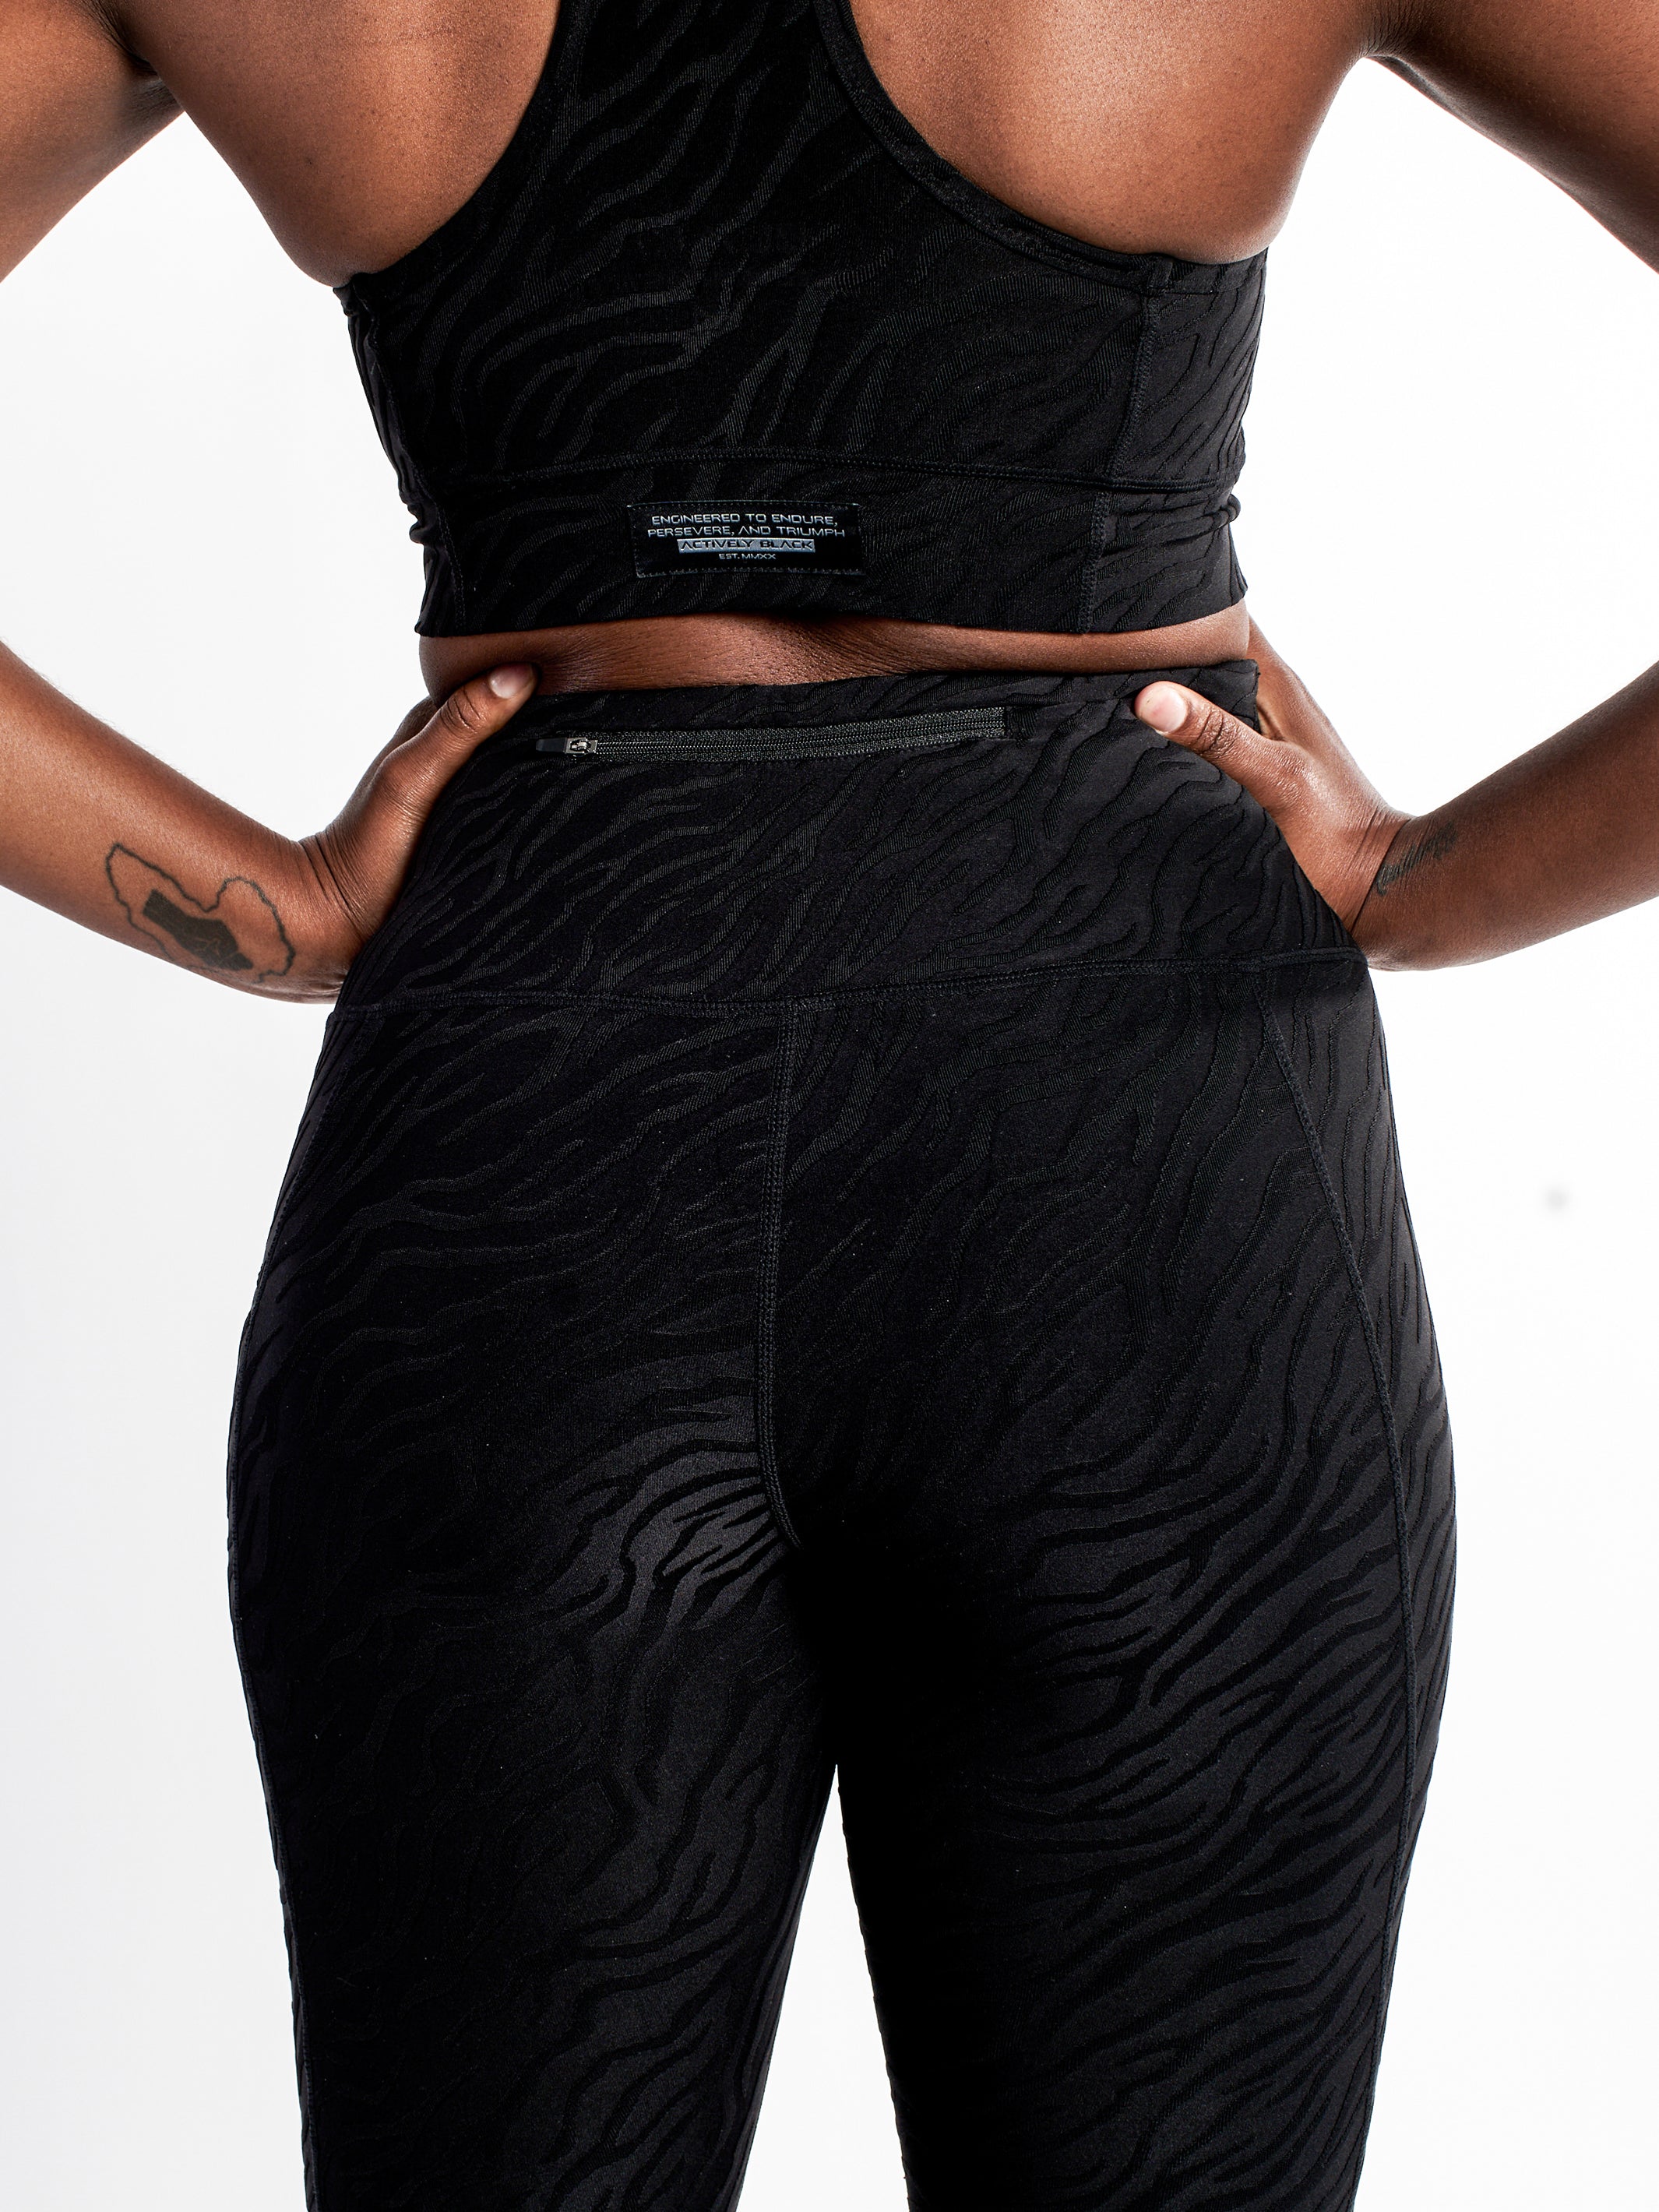 Women's Black Zebra Luxe Tights